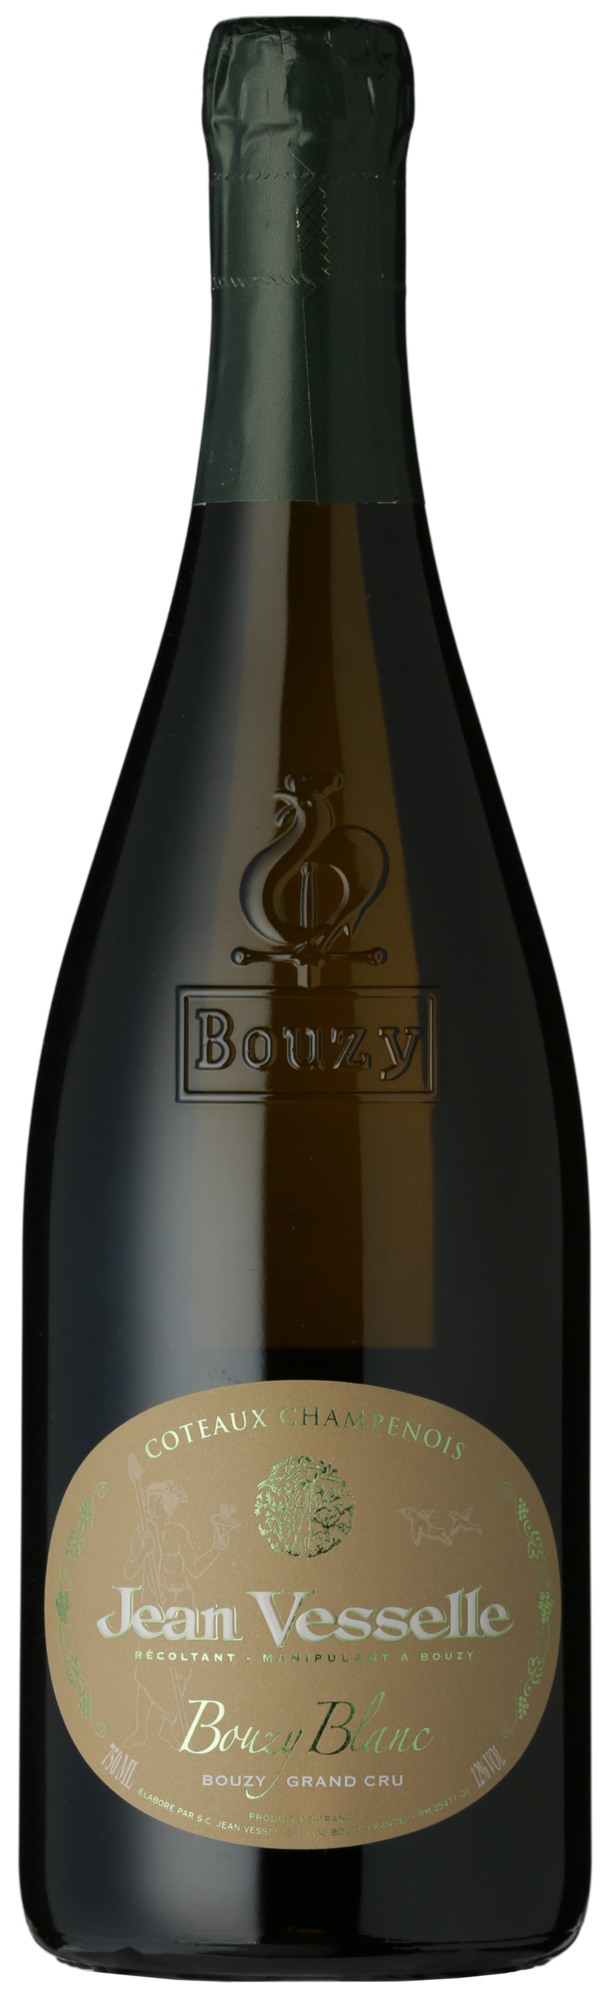 NV Champagne Jean Vesselle ‘Bouzy Blanc’ Coteaux Champenois (Still White Wine Using Pinot Noir)